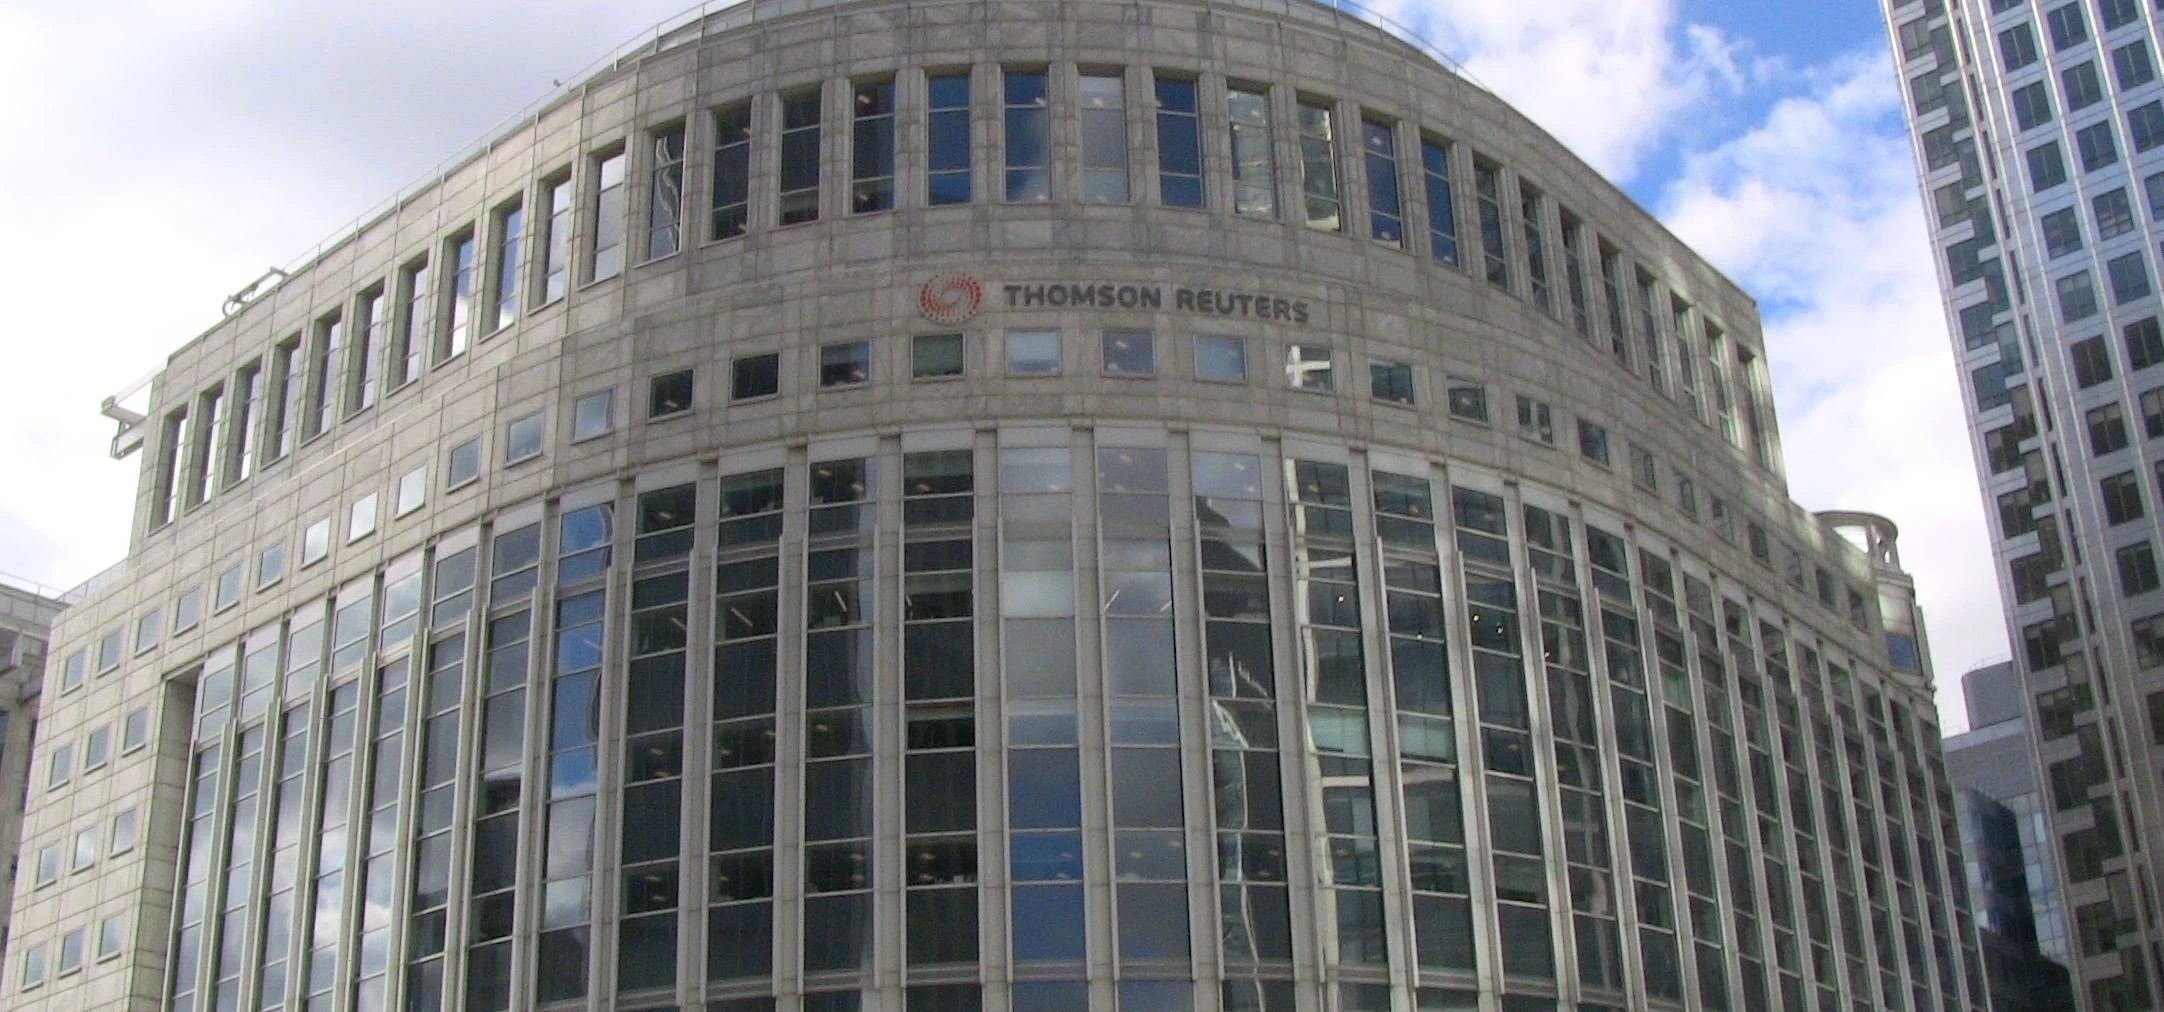 The Thomson Reuters building, Canary Wharf. Photo: Reubentg/Wikimedia